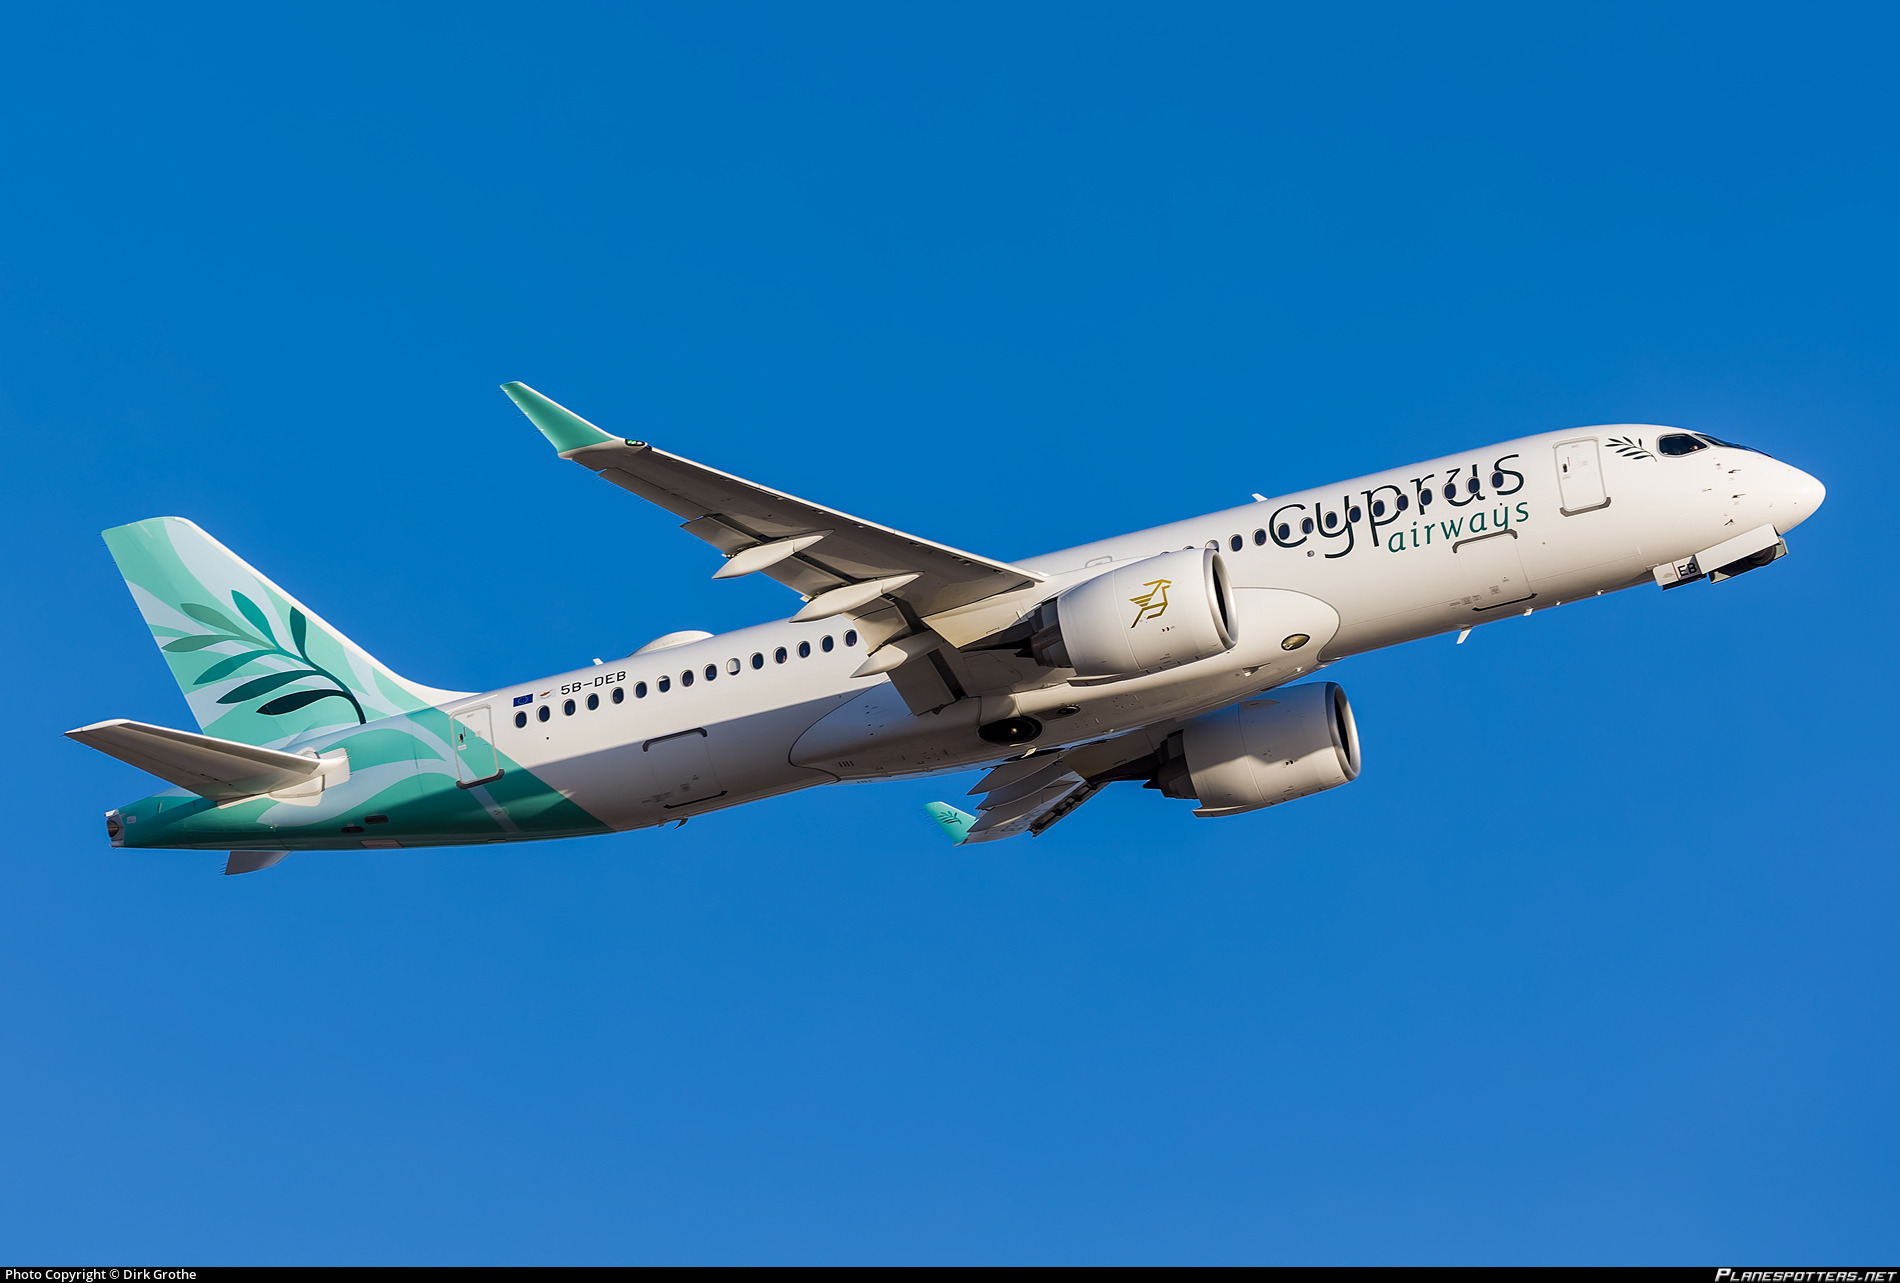 Cyprus Airways: Προσωρινή αναστολή του δρομολογίου Λάρνακα -Τελ Αβίβ